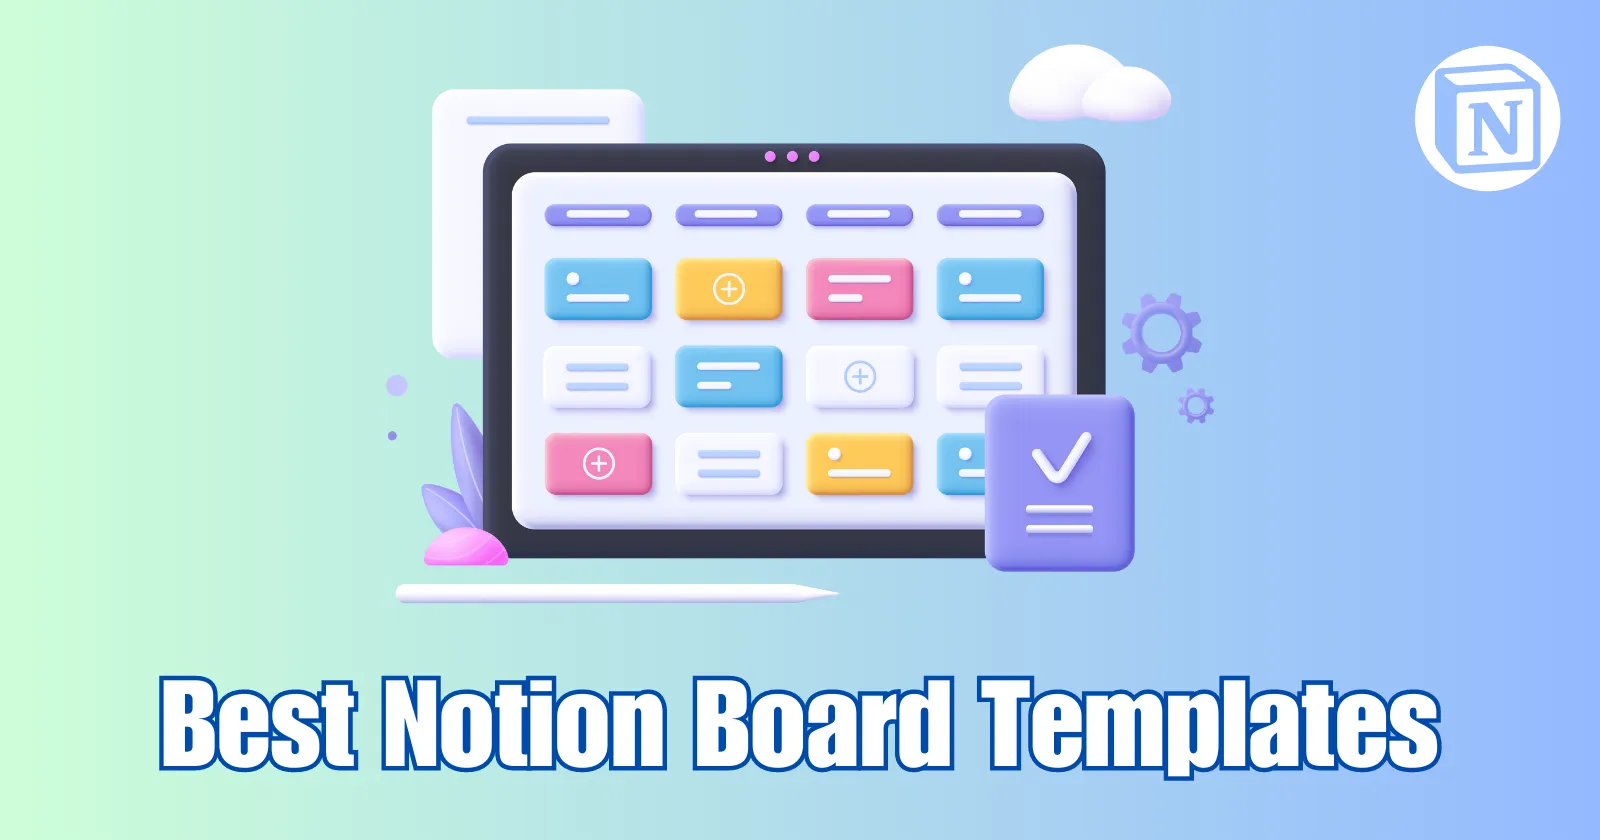 Best Notion Board Templates